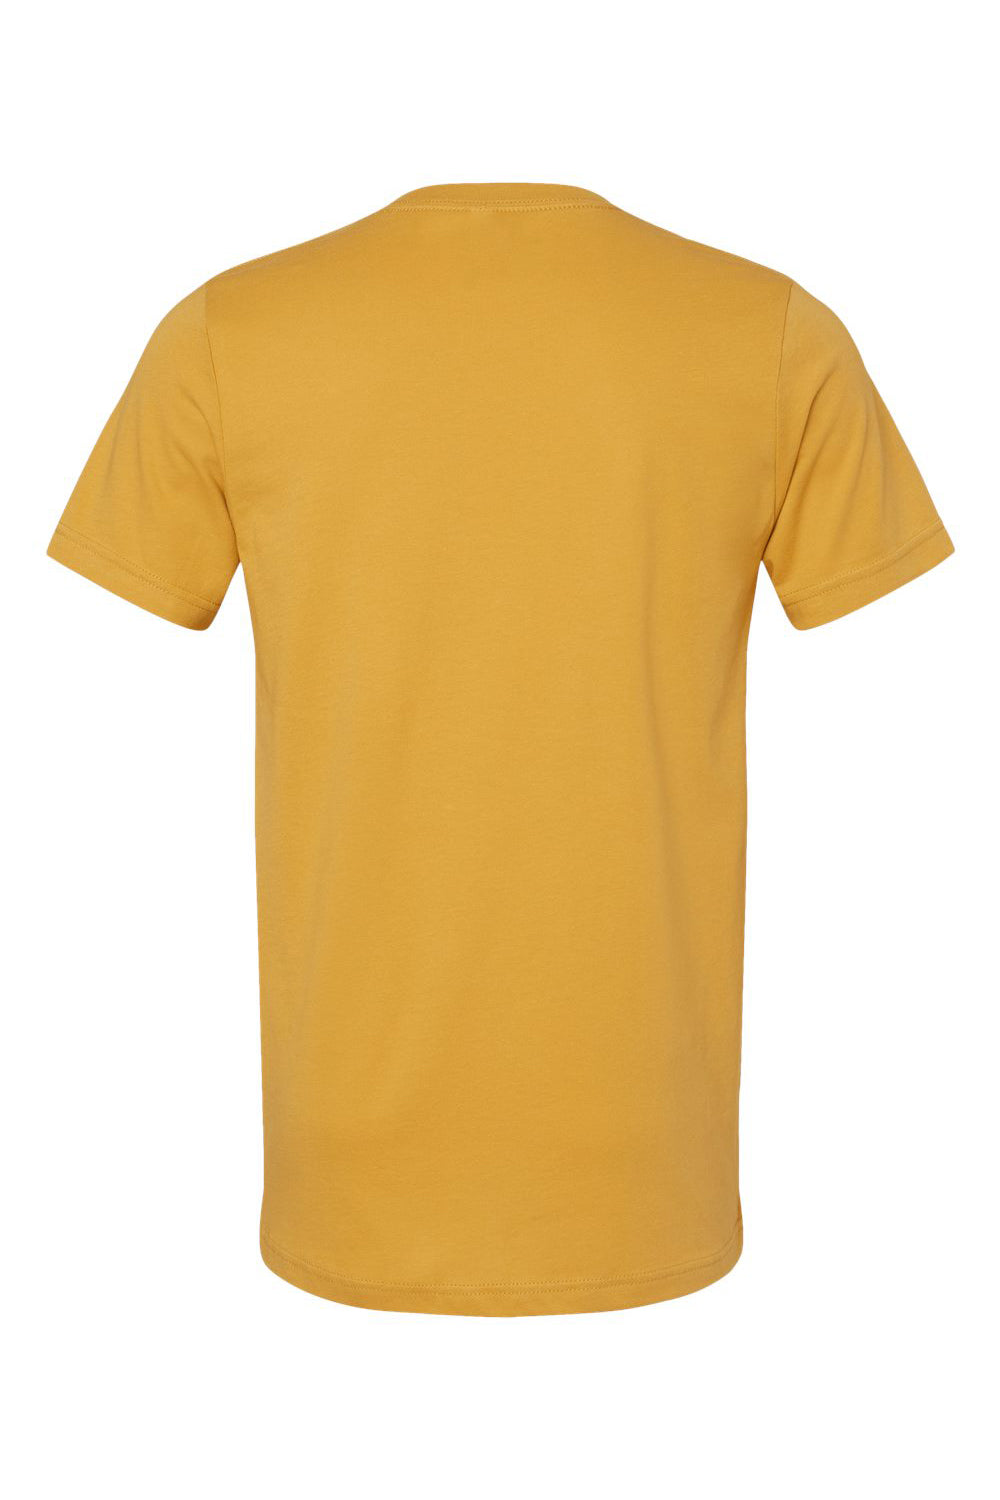 Bella + Canvas BC3005/3005/3655C Mens Jersey Short Sleeve V-Neck T-Shirt Mustard Yellow Flat Back